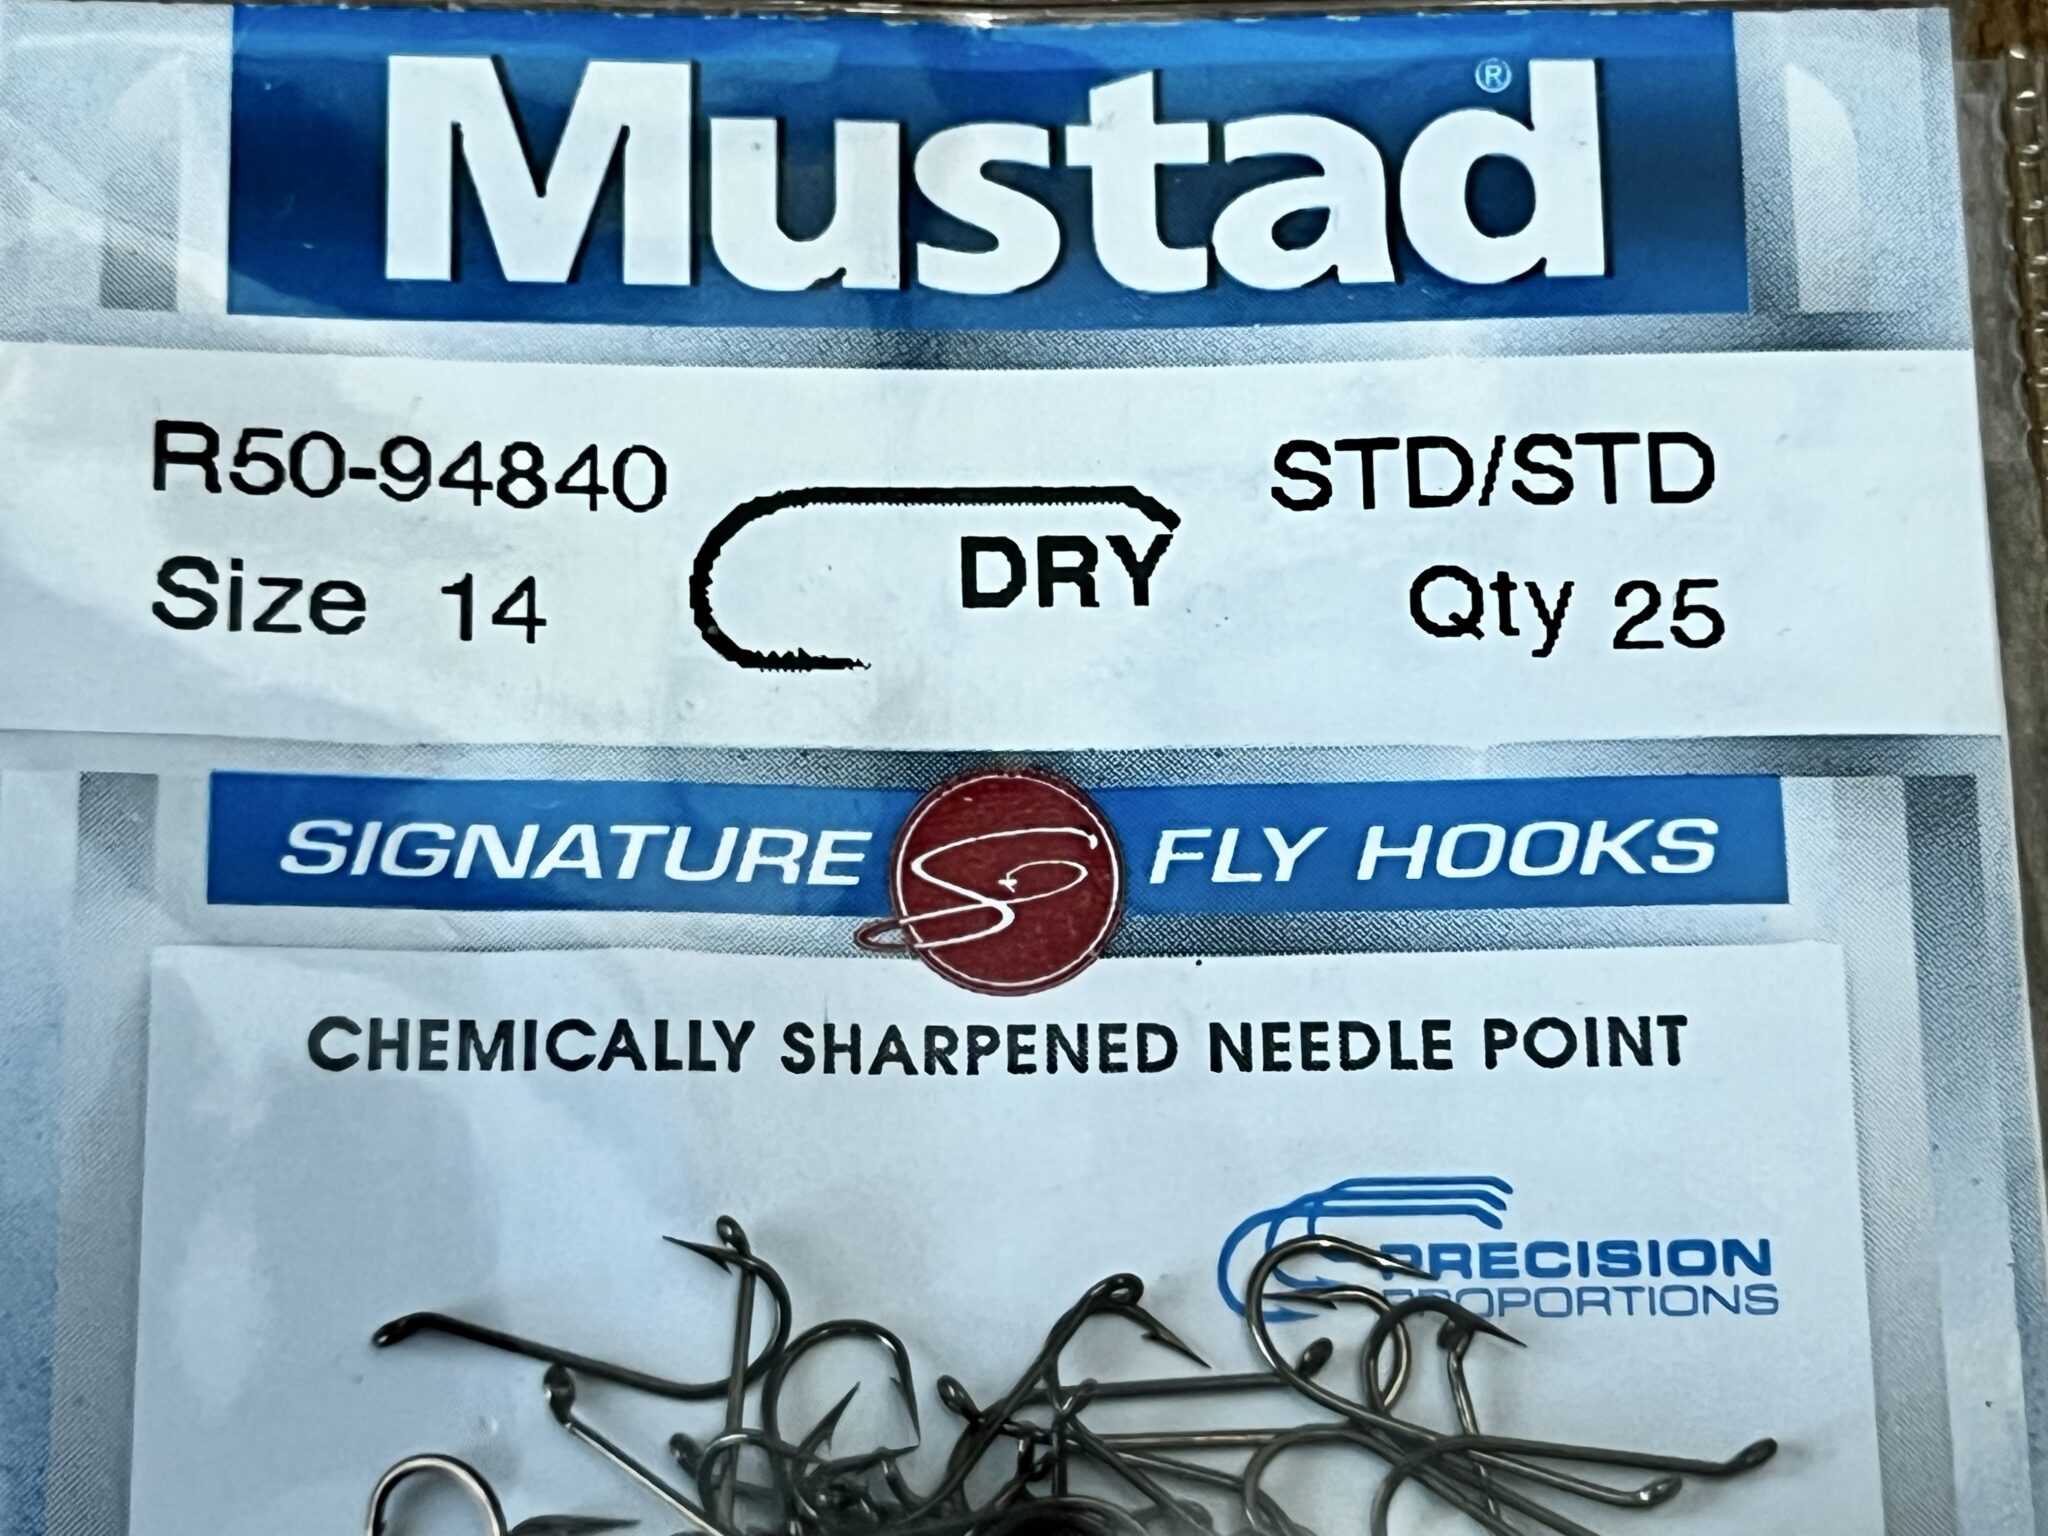 Standard Dry Fly Hook Size